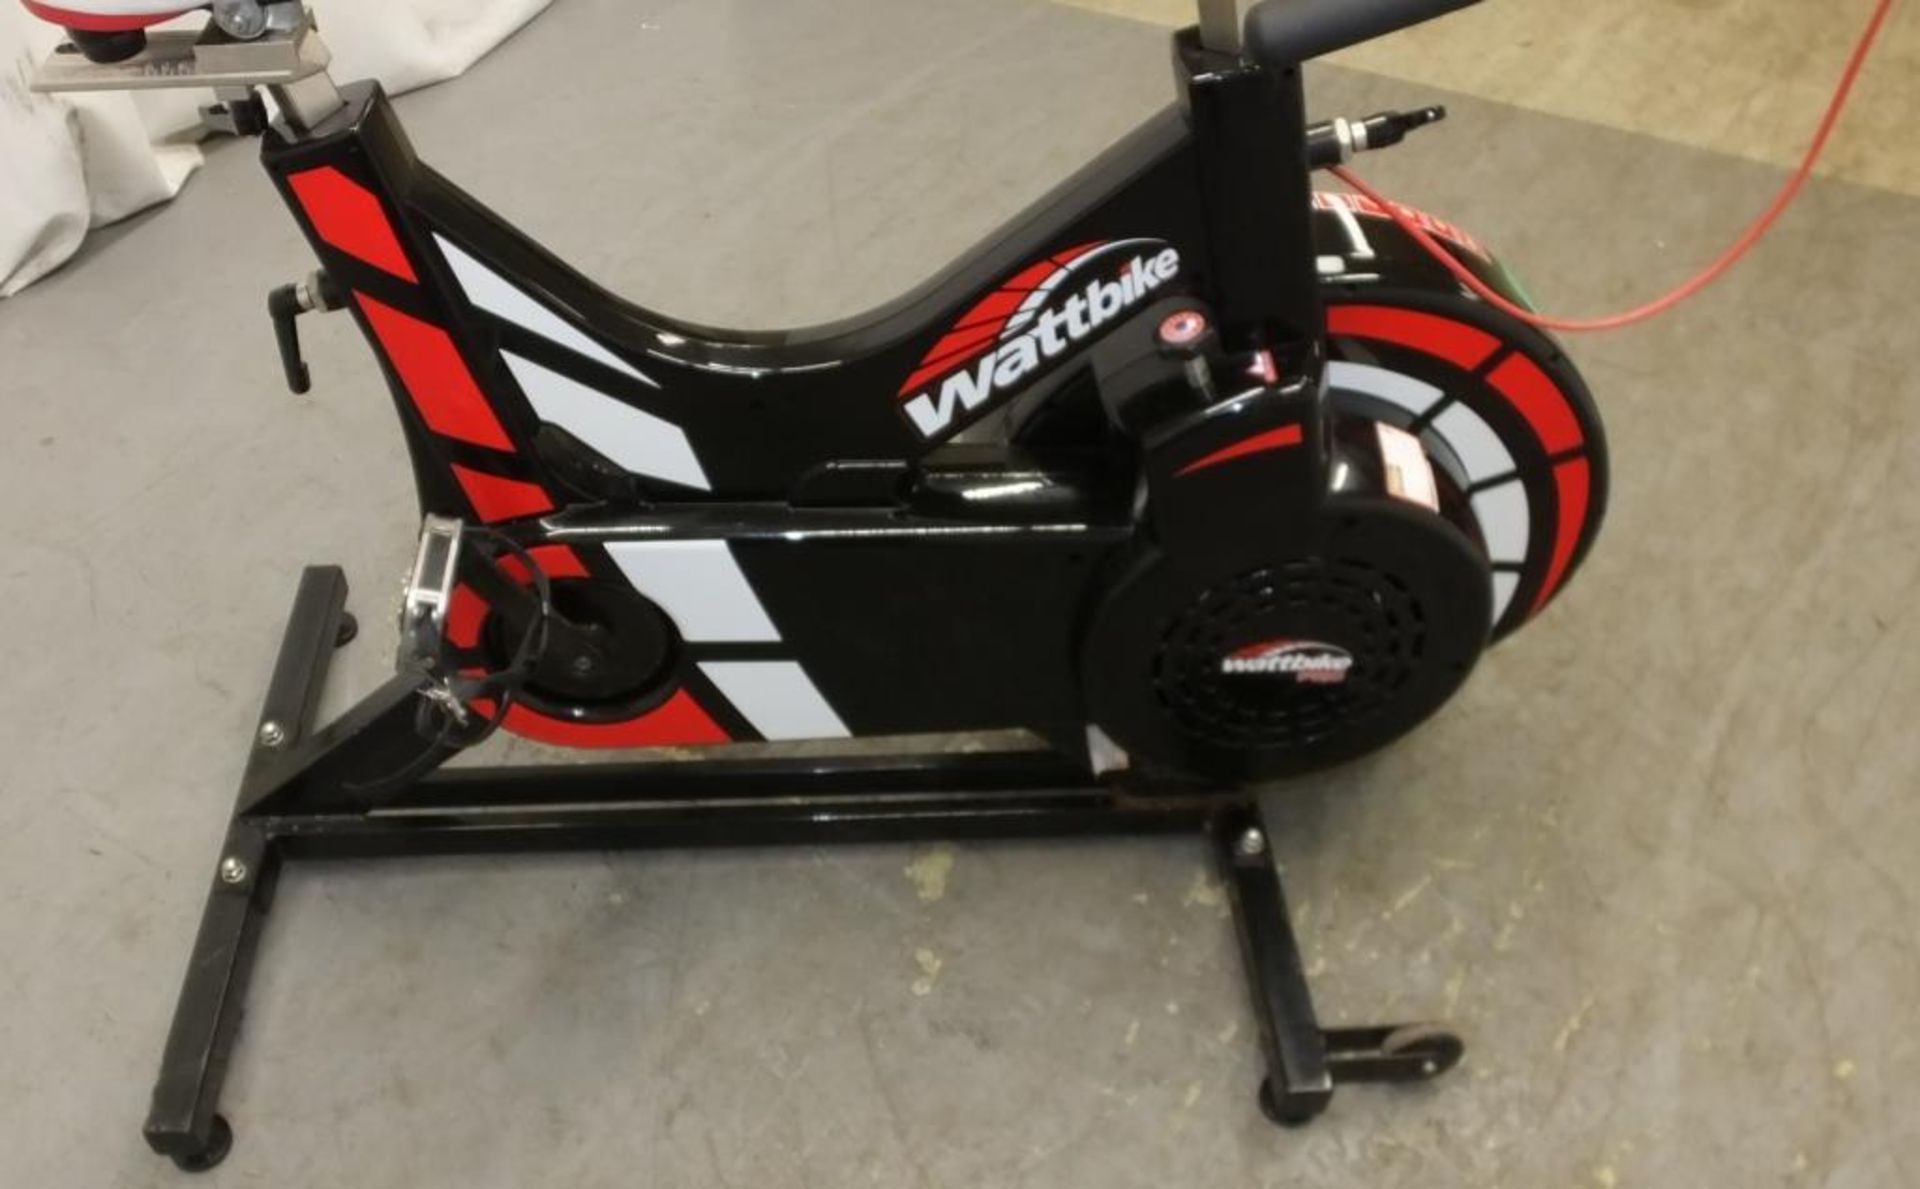 Wattbike Pro Training Exercise Bike - console powers up - functionality untested - Image 4 of 6